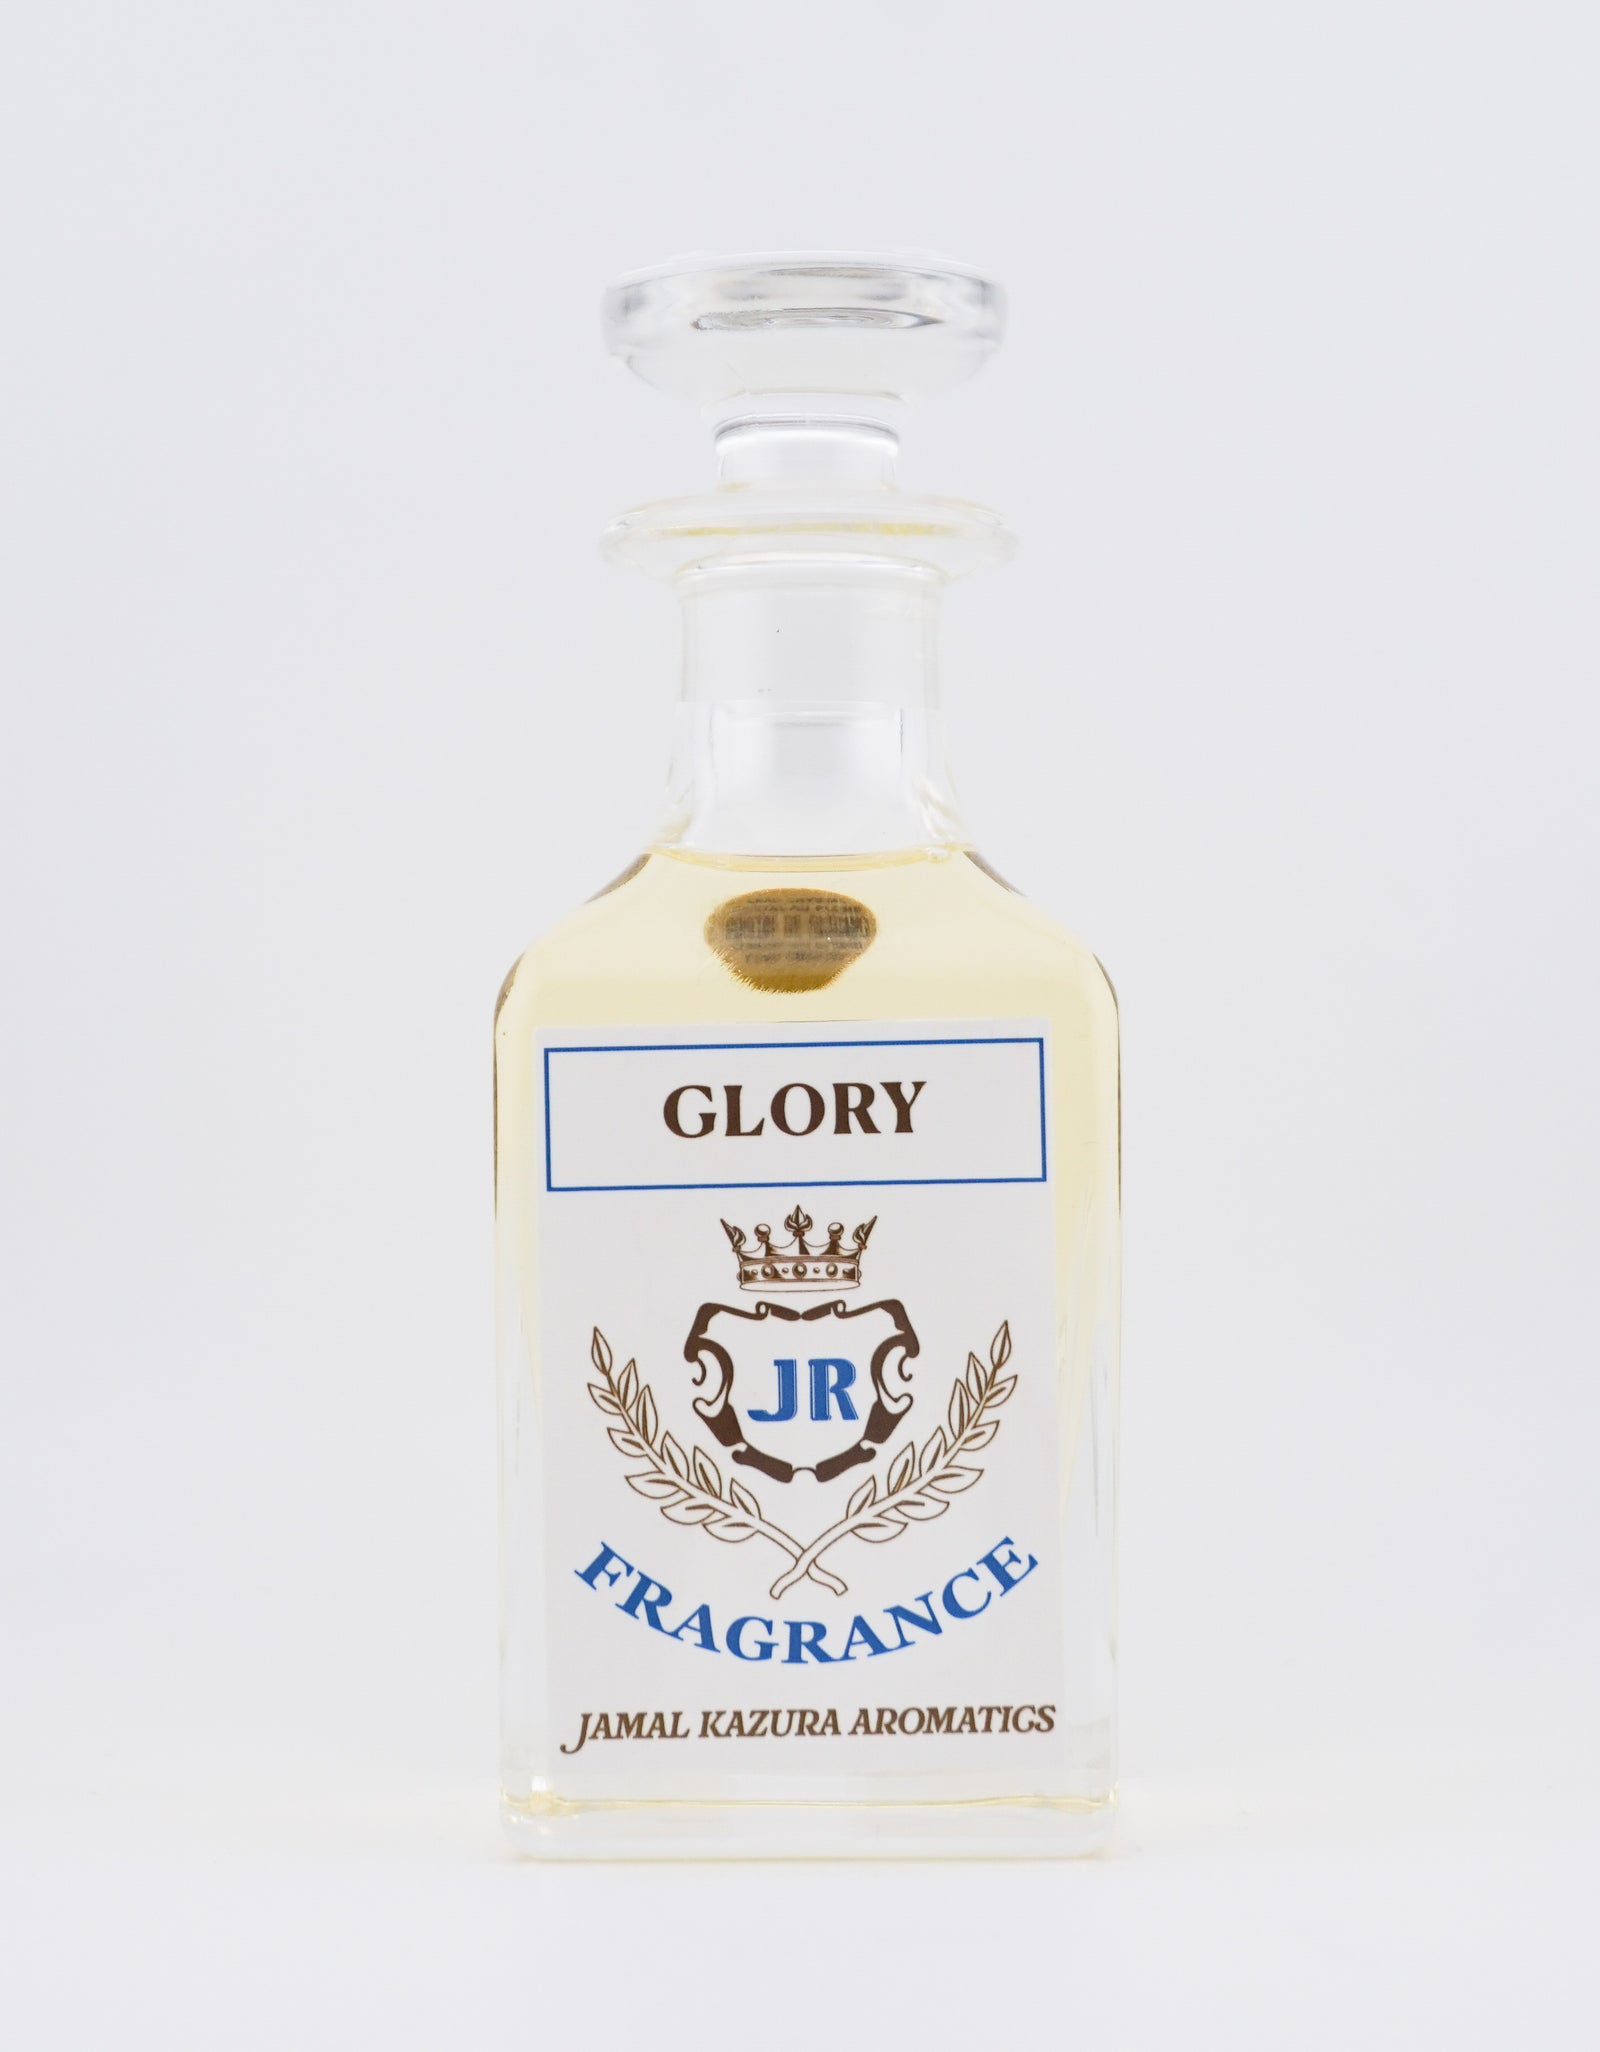 GLORY Perfume Decanters - Jamal Kazura Aromatics